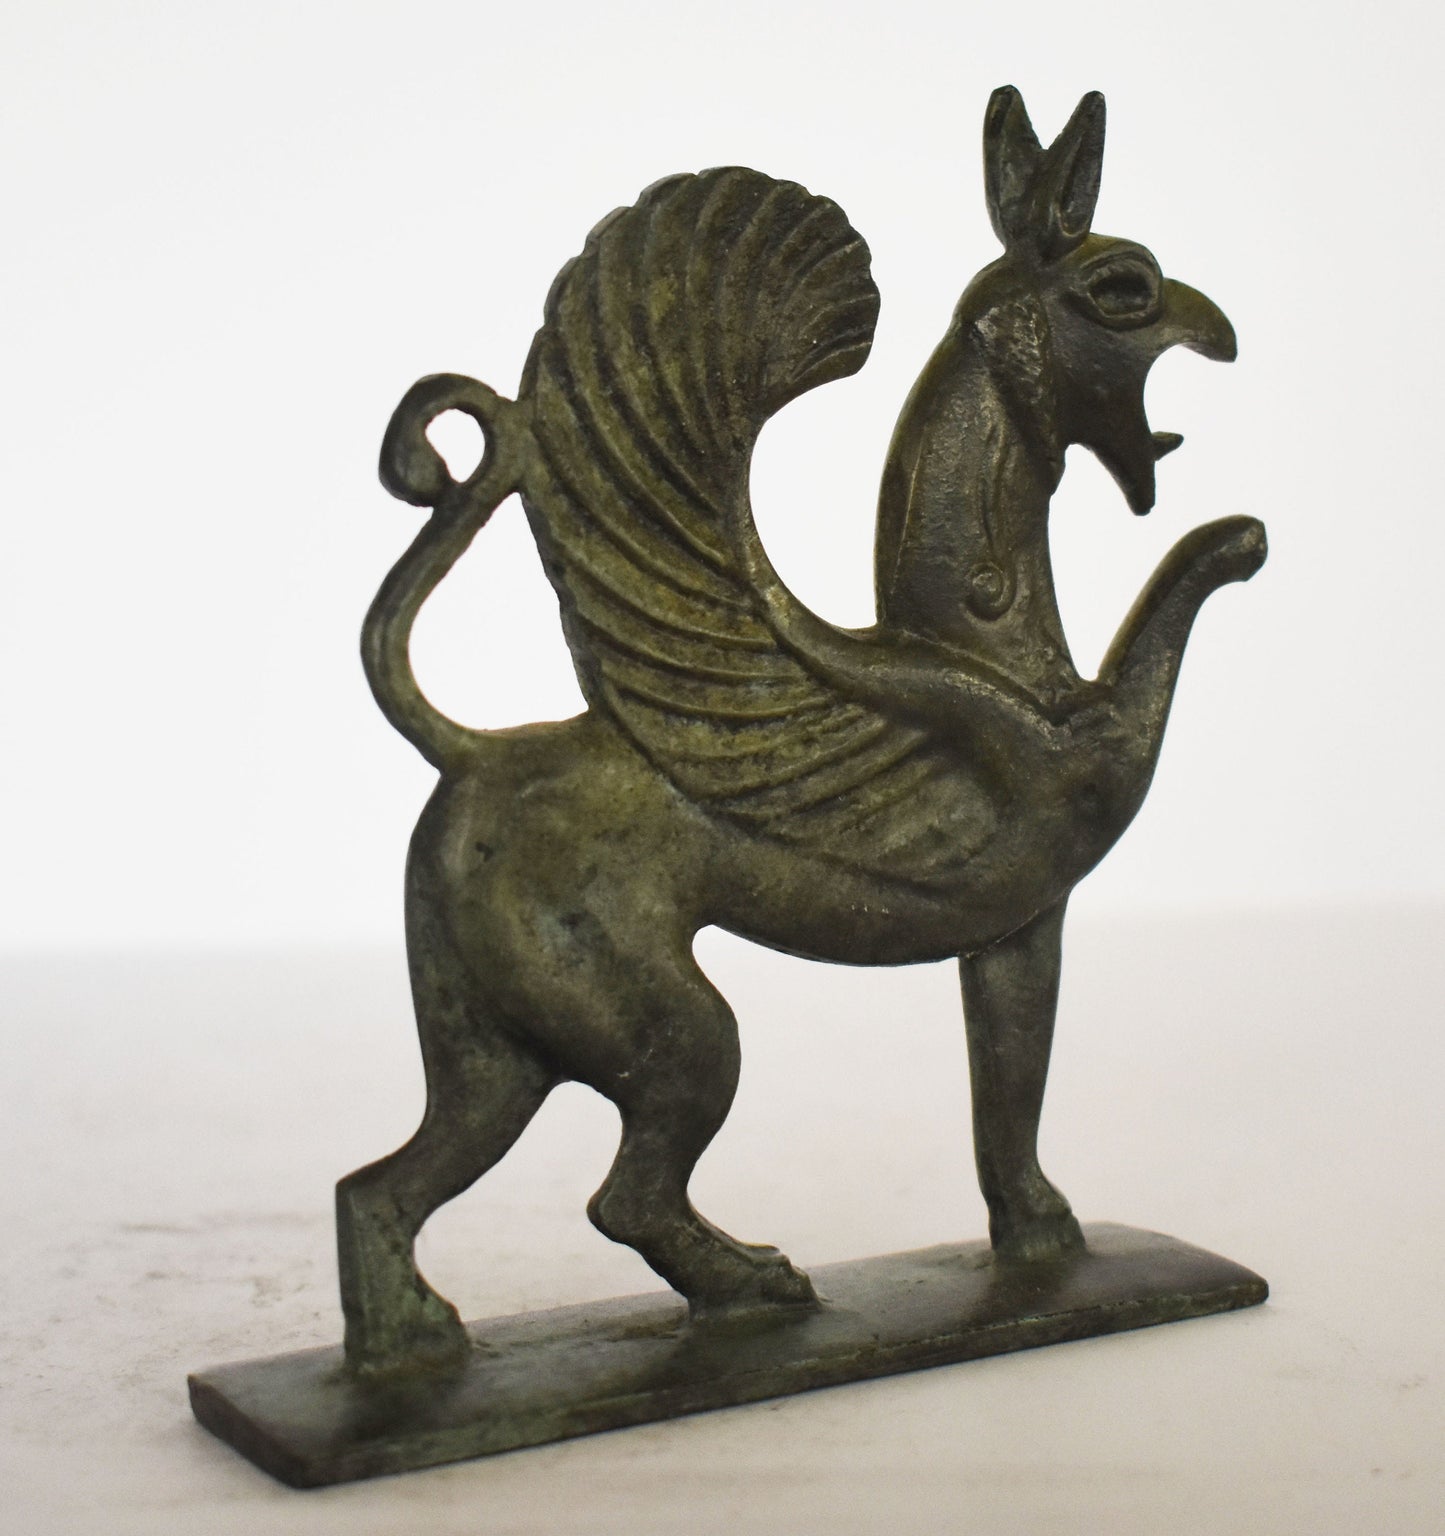 Griffin -  marble base - Ancient Greek legendary creature - Museum Replica - pure Bronze Sculpture